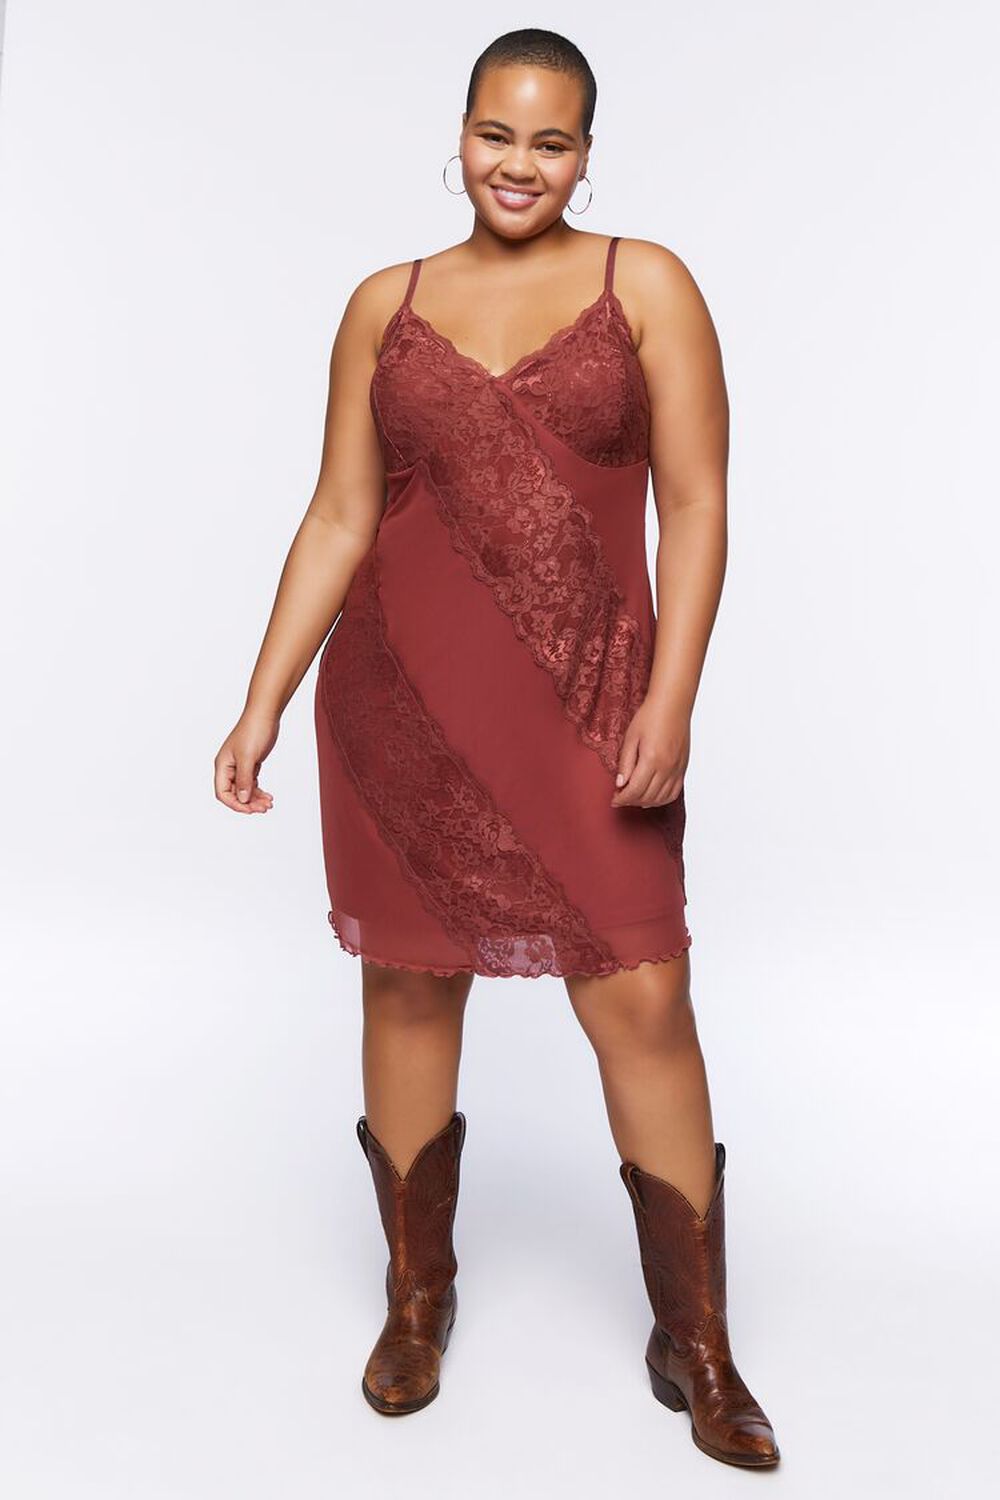 BRICK Plus Size Lace Mesh Slip Dress, image 1